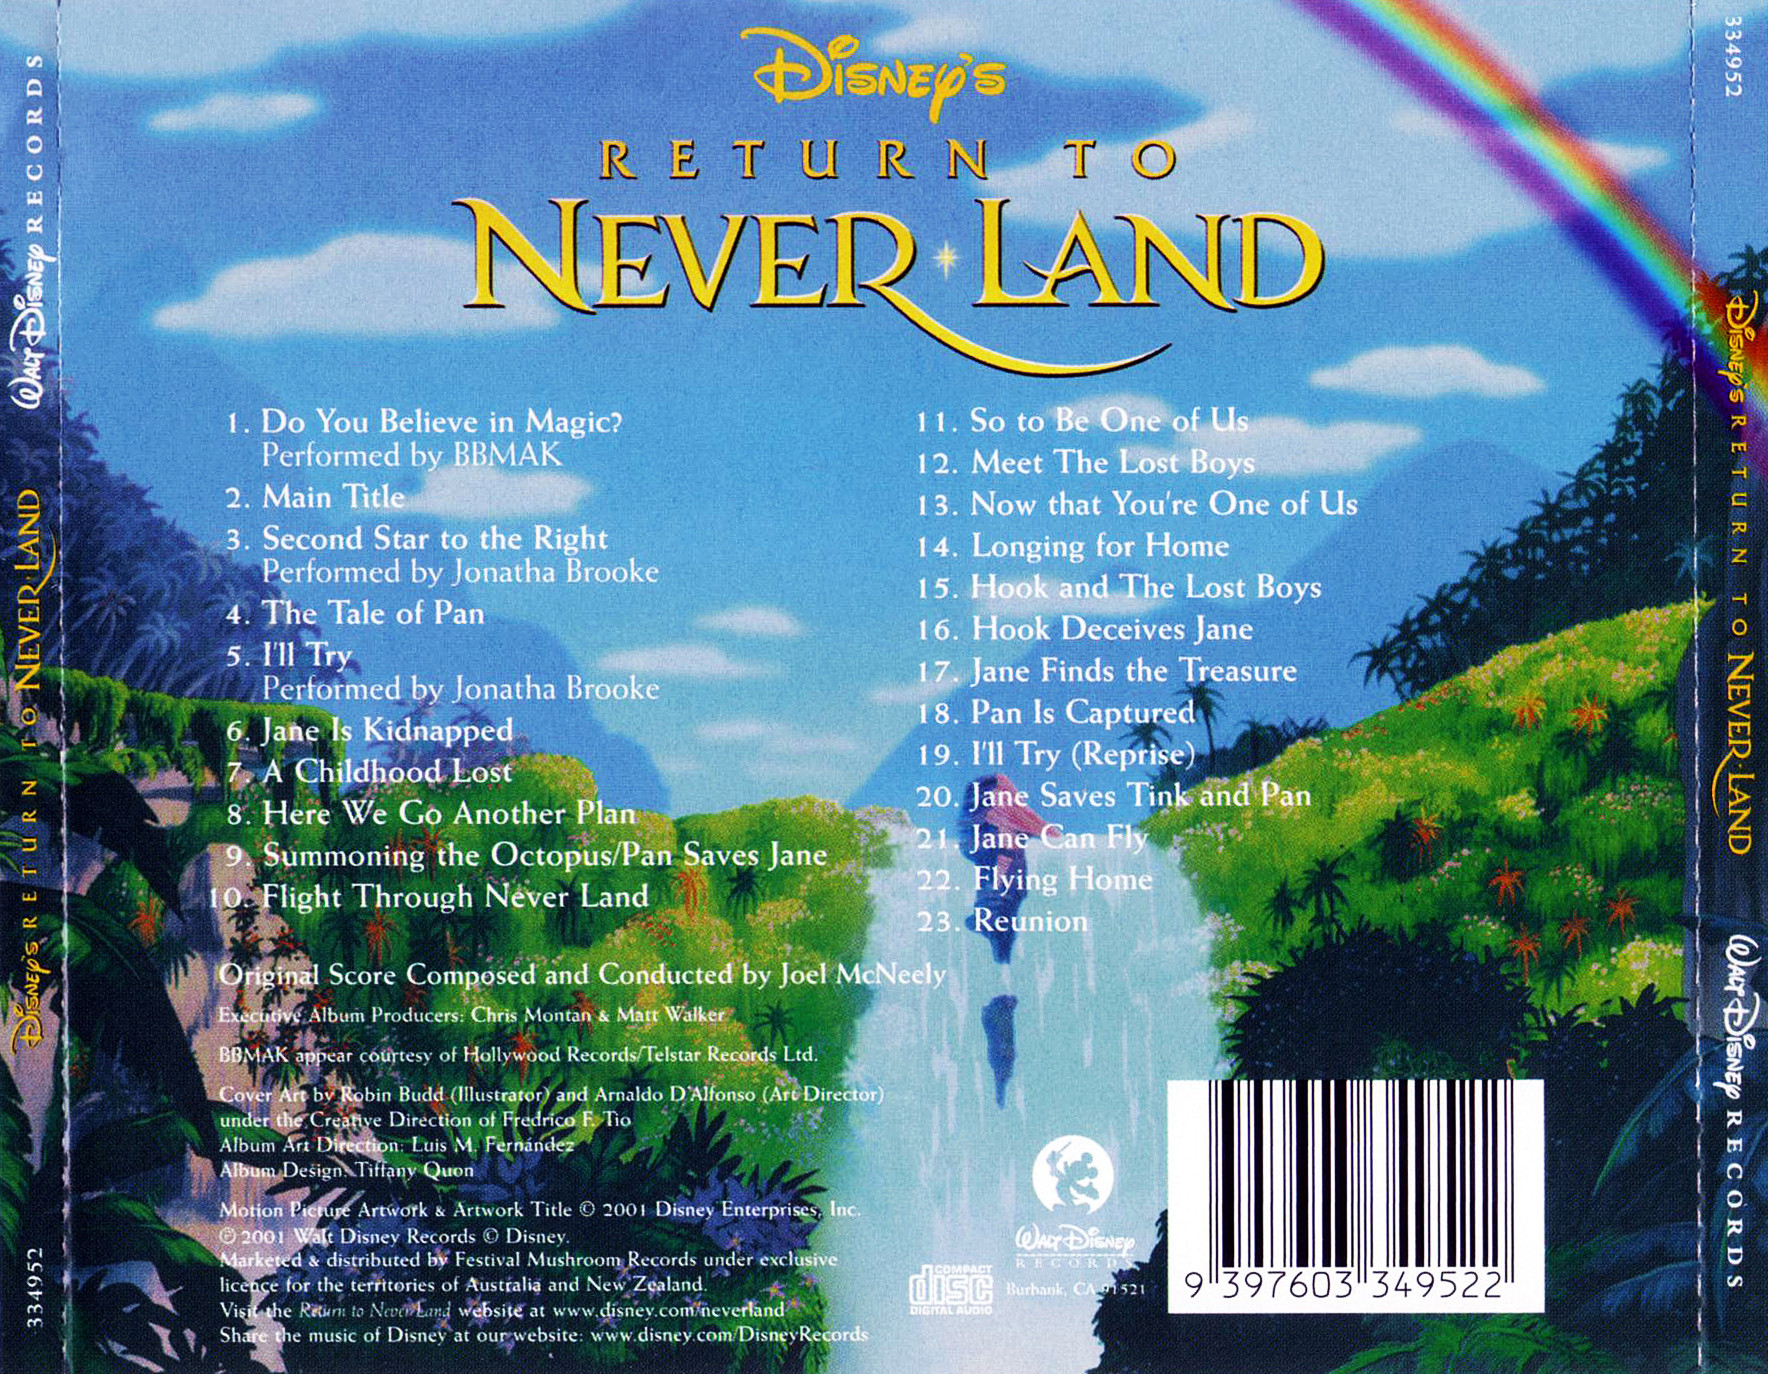 Film Music Site - Return to Never Land Soundtrack (Joel McNeely) - Walt